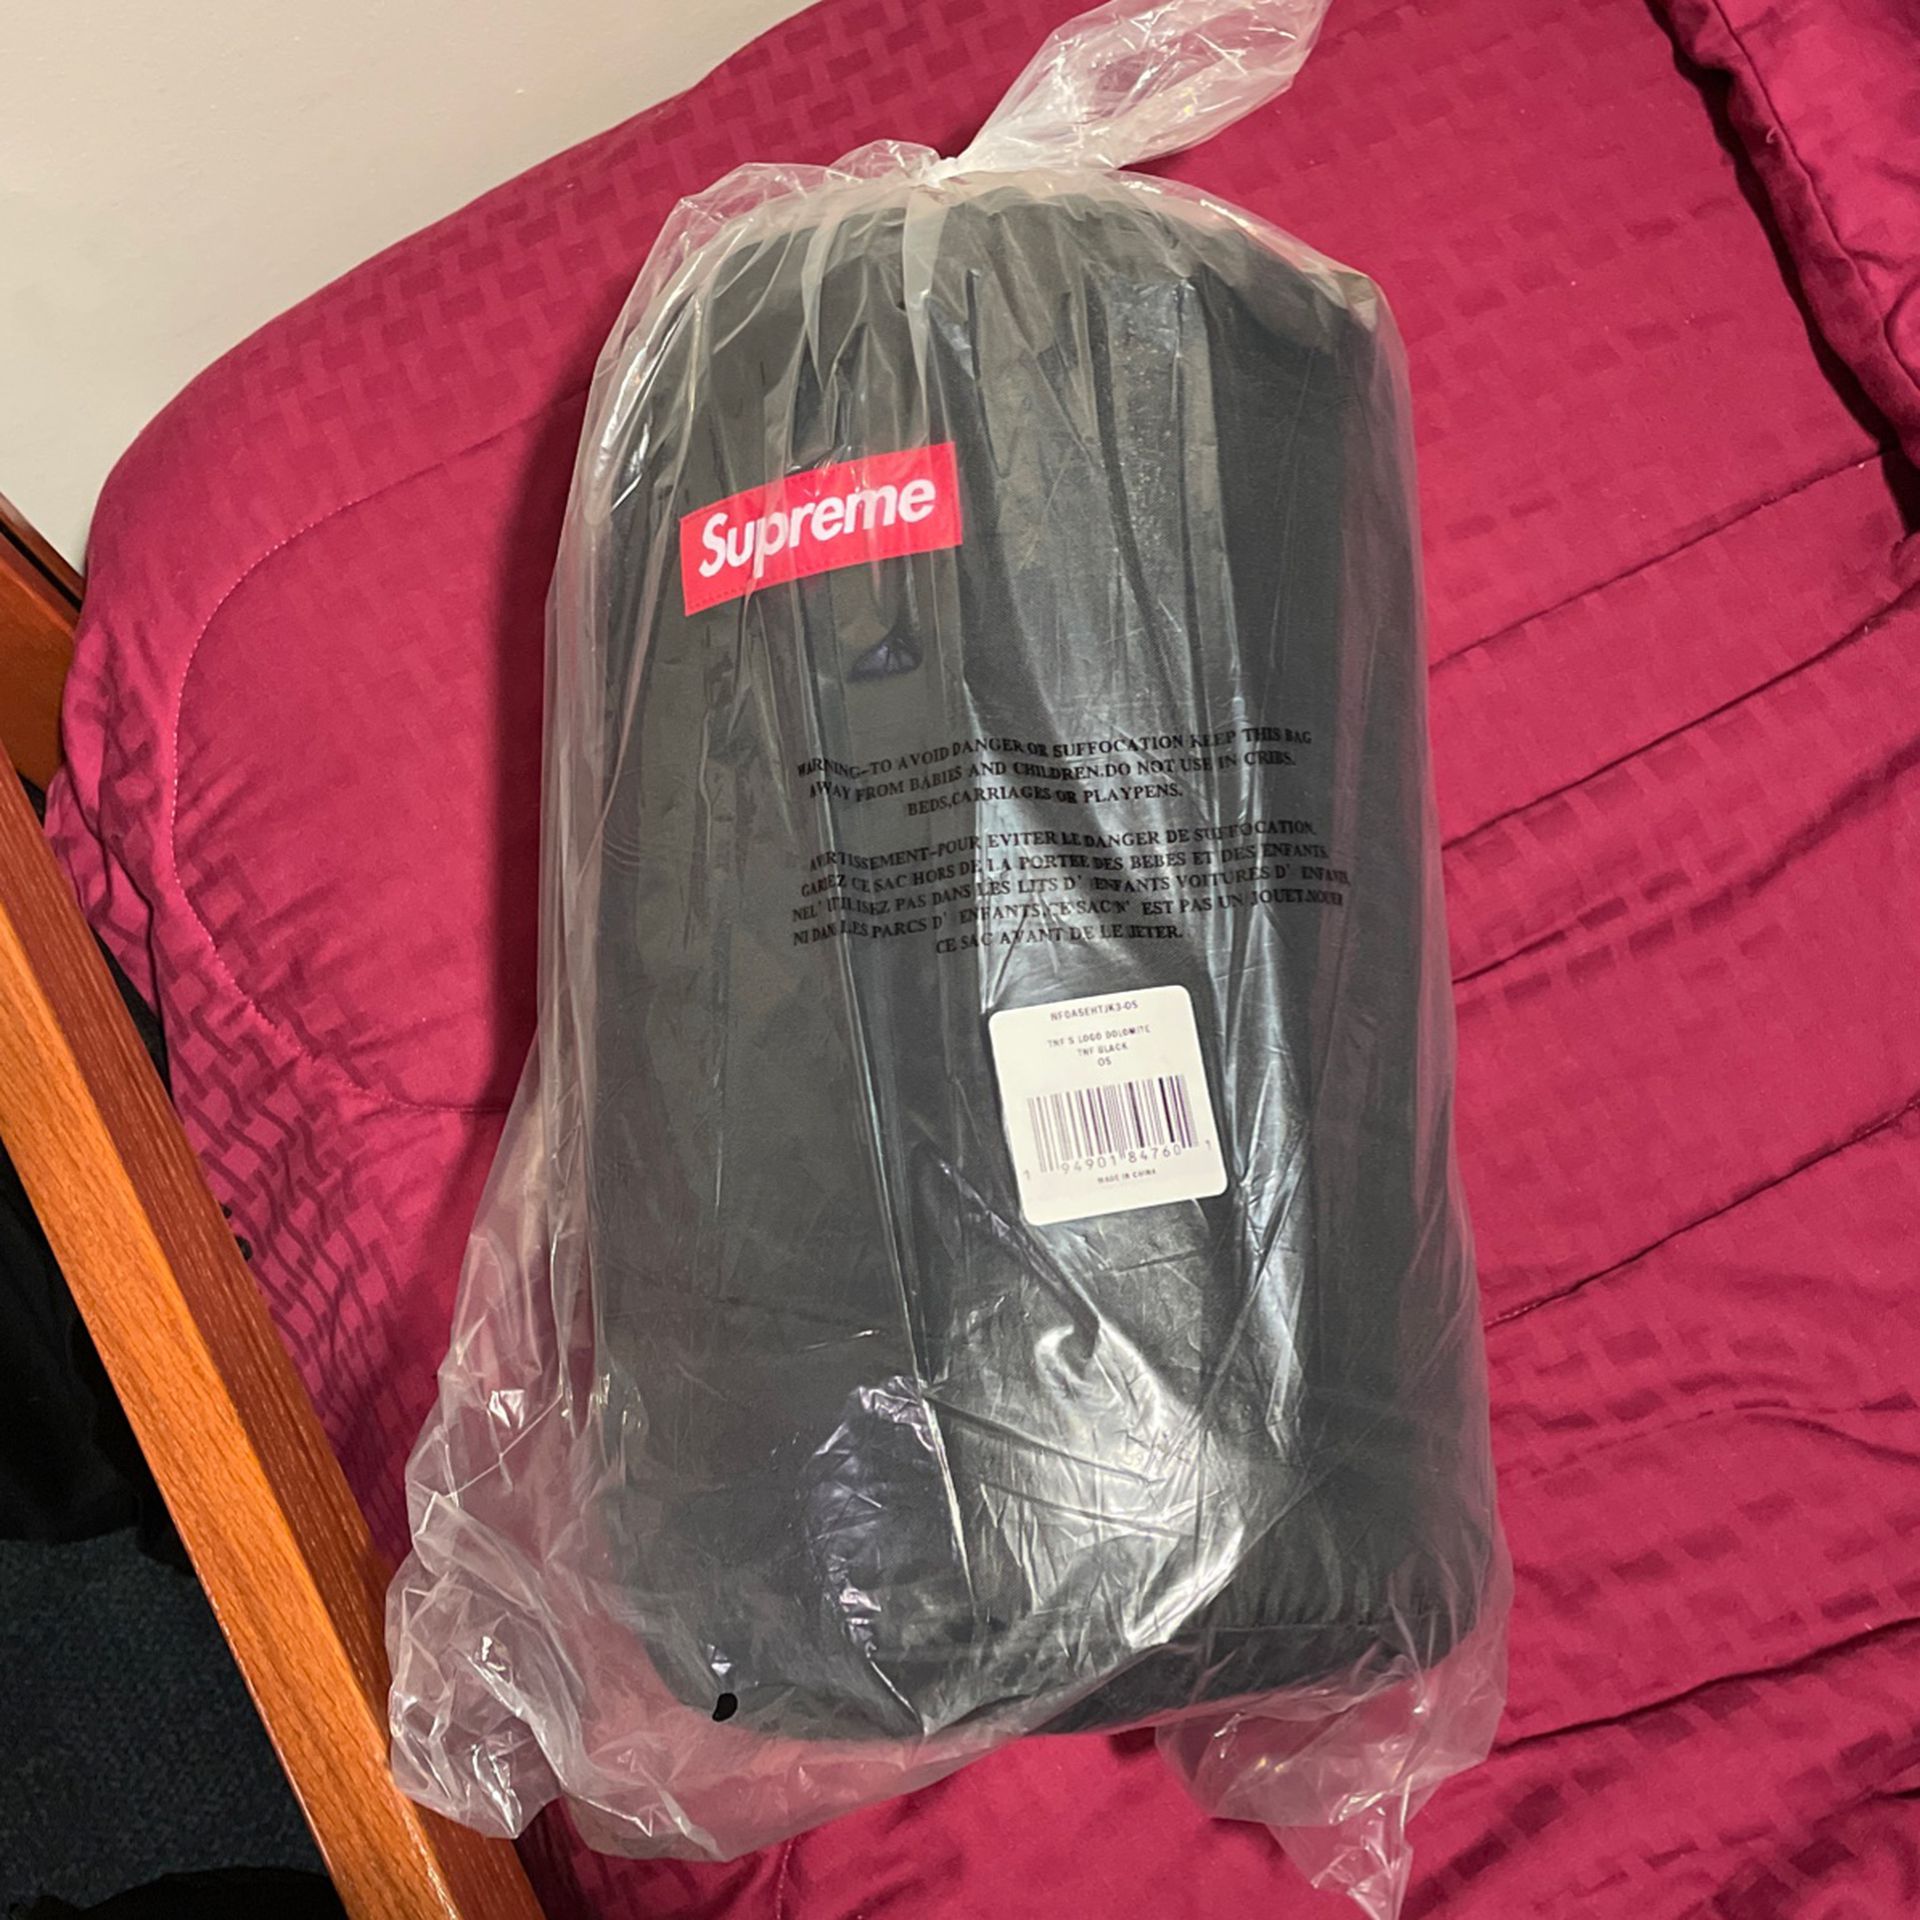 Supreme x North Face sleeping bag